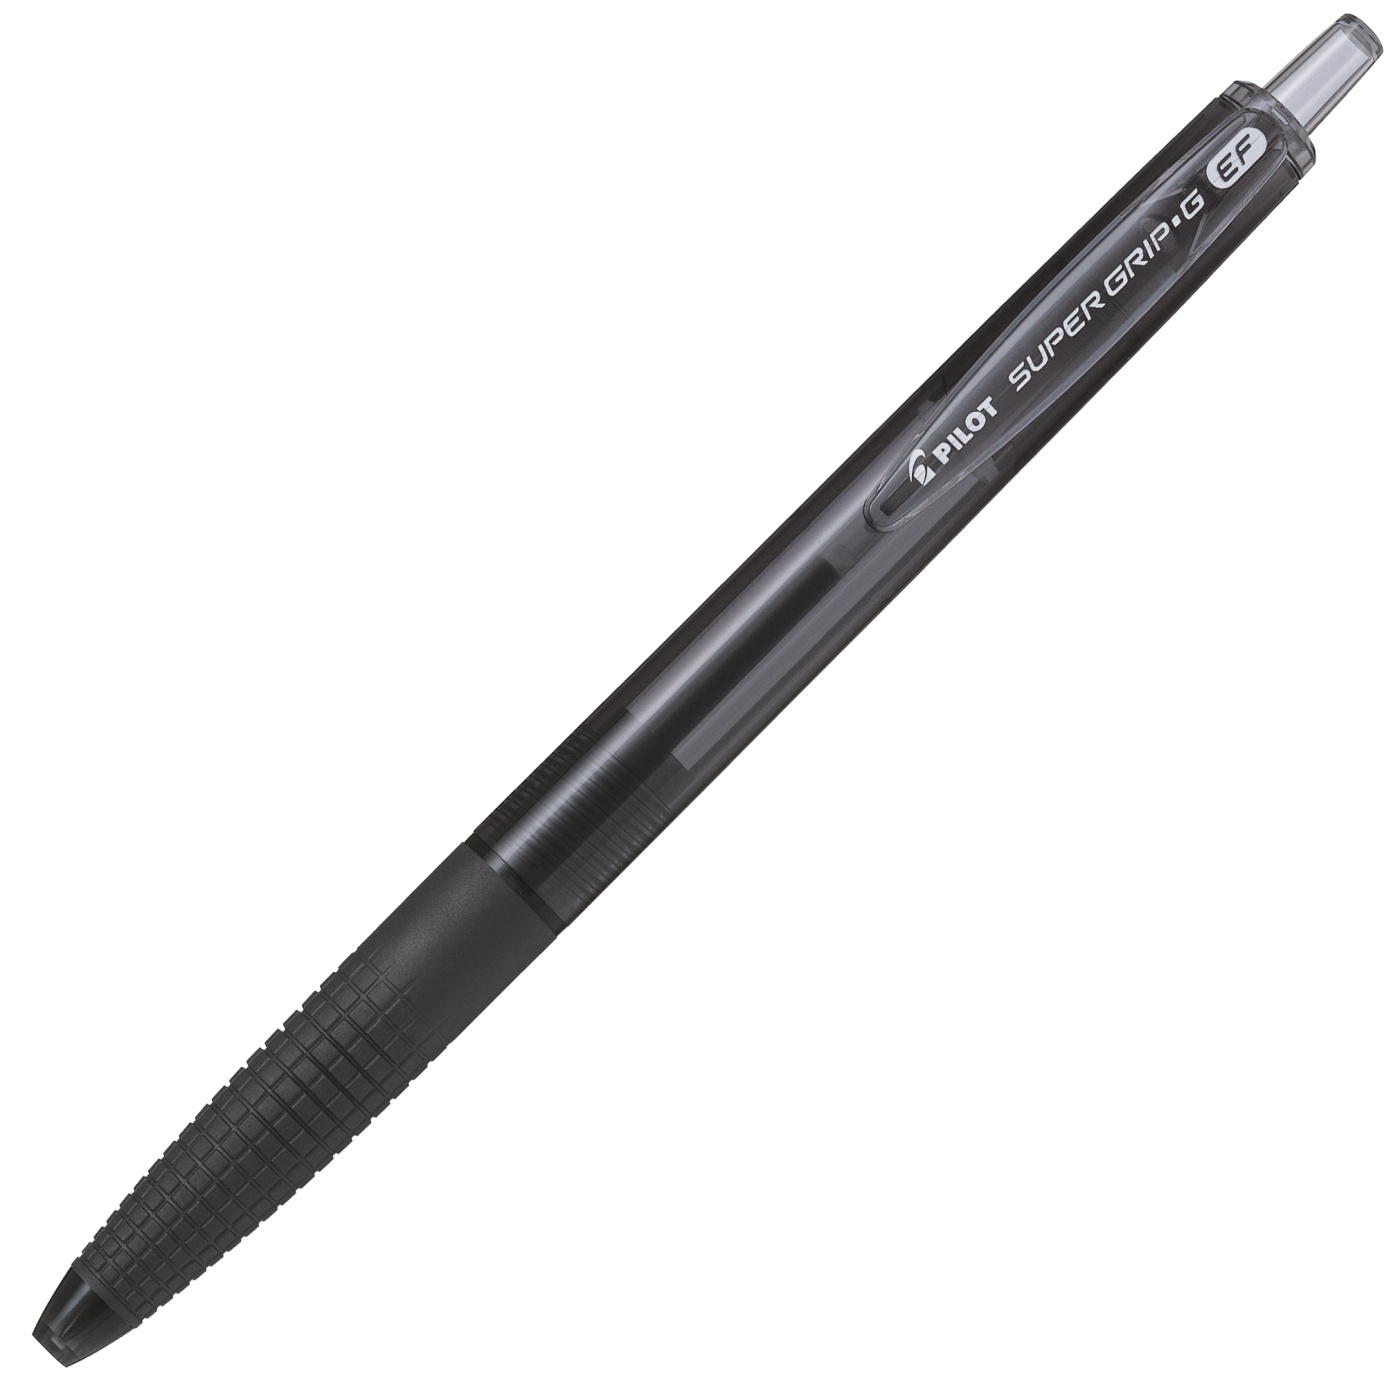 Pilot Super Grip G Retractable Ballpoint pen Black Extra Broad Tip